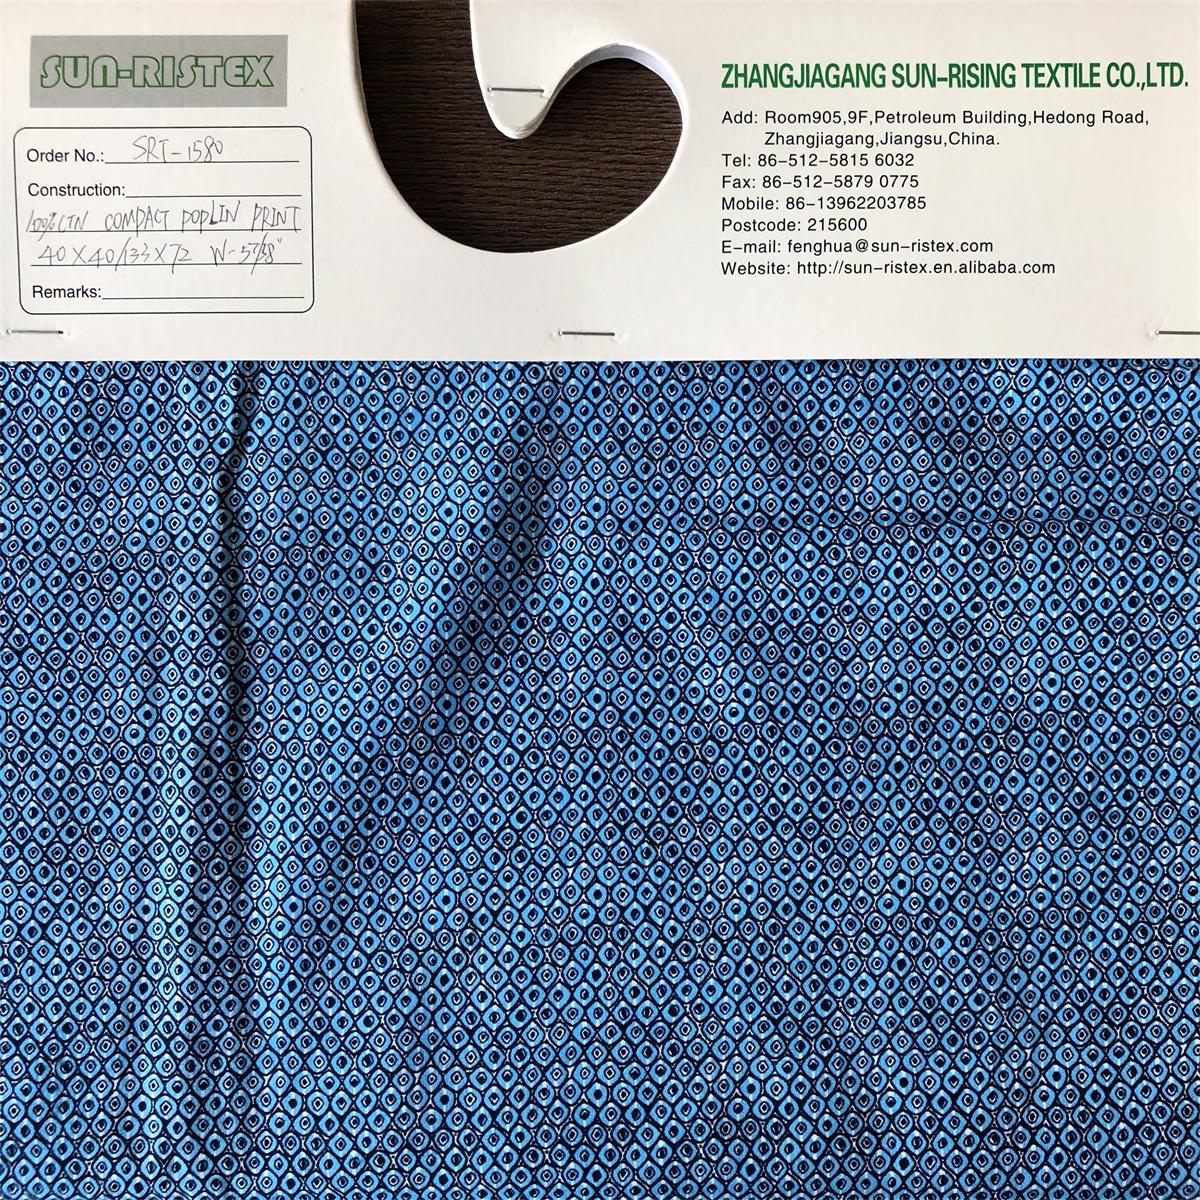 Hot Sun-rising Textile Cotton fabric 40S compact yarn for men's casual shirts 100% cotton poplin printed shirts woven fabric